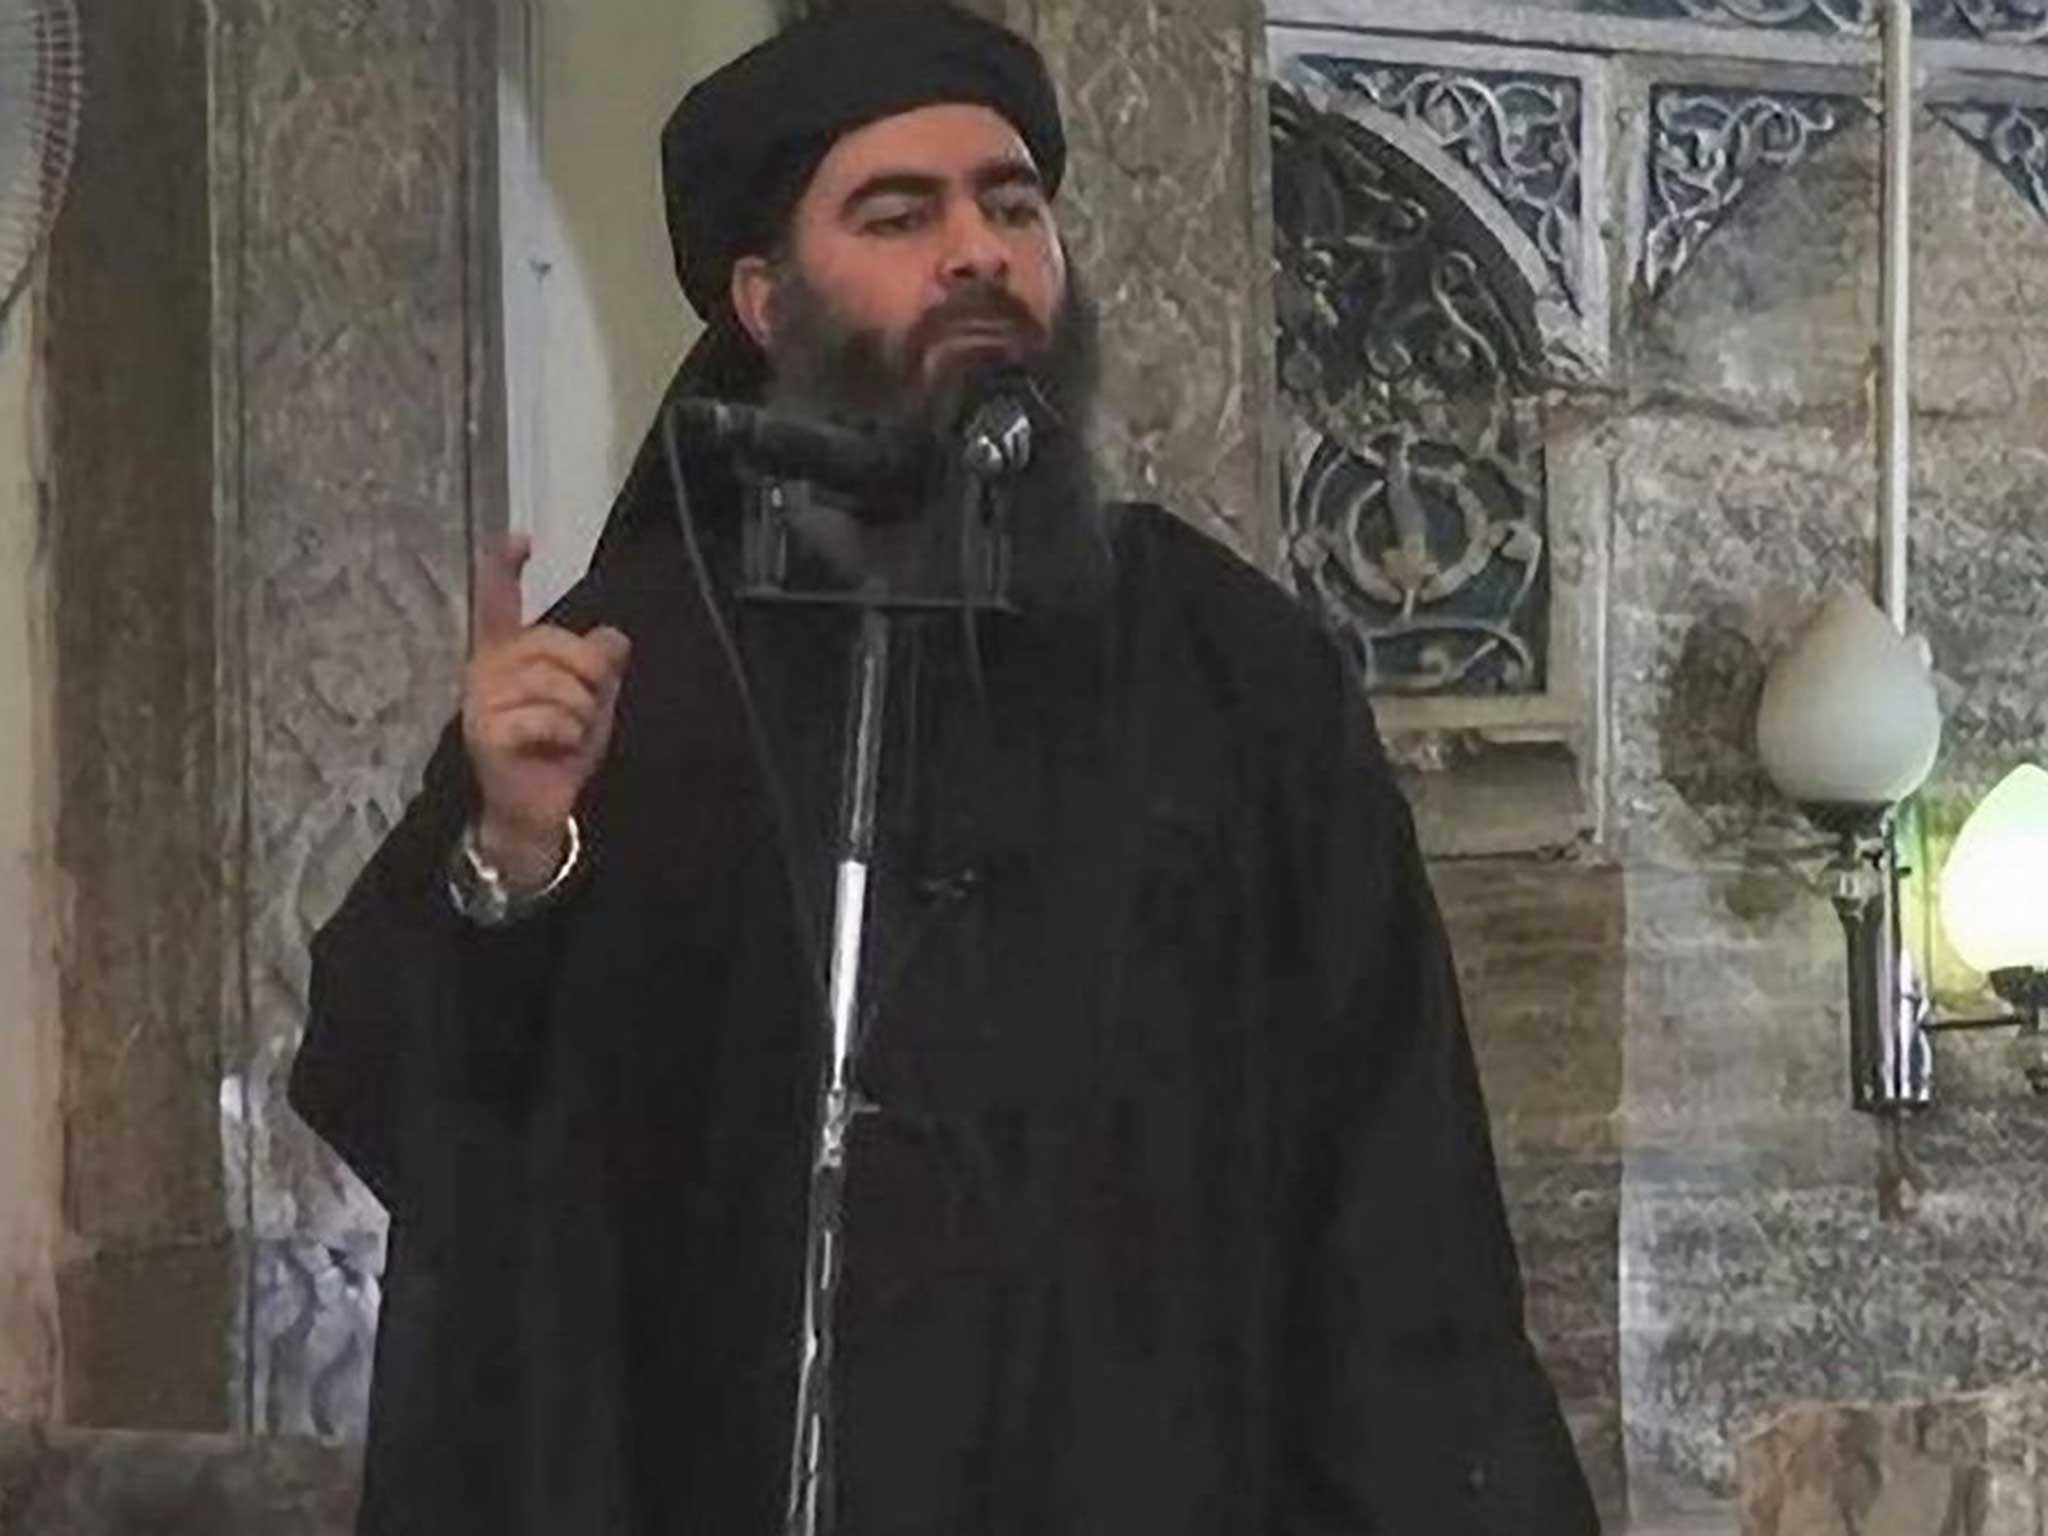 Abu Bakr al-Baghdadi has appointed himself caliph of the self-proclaimed Islamic State